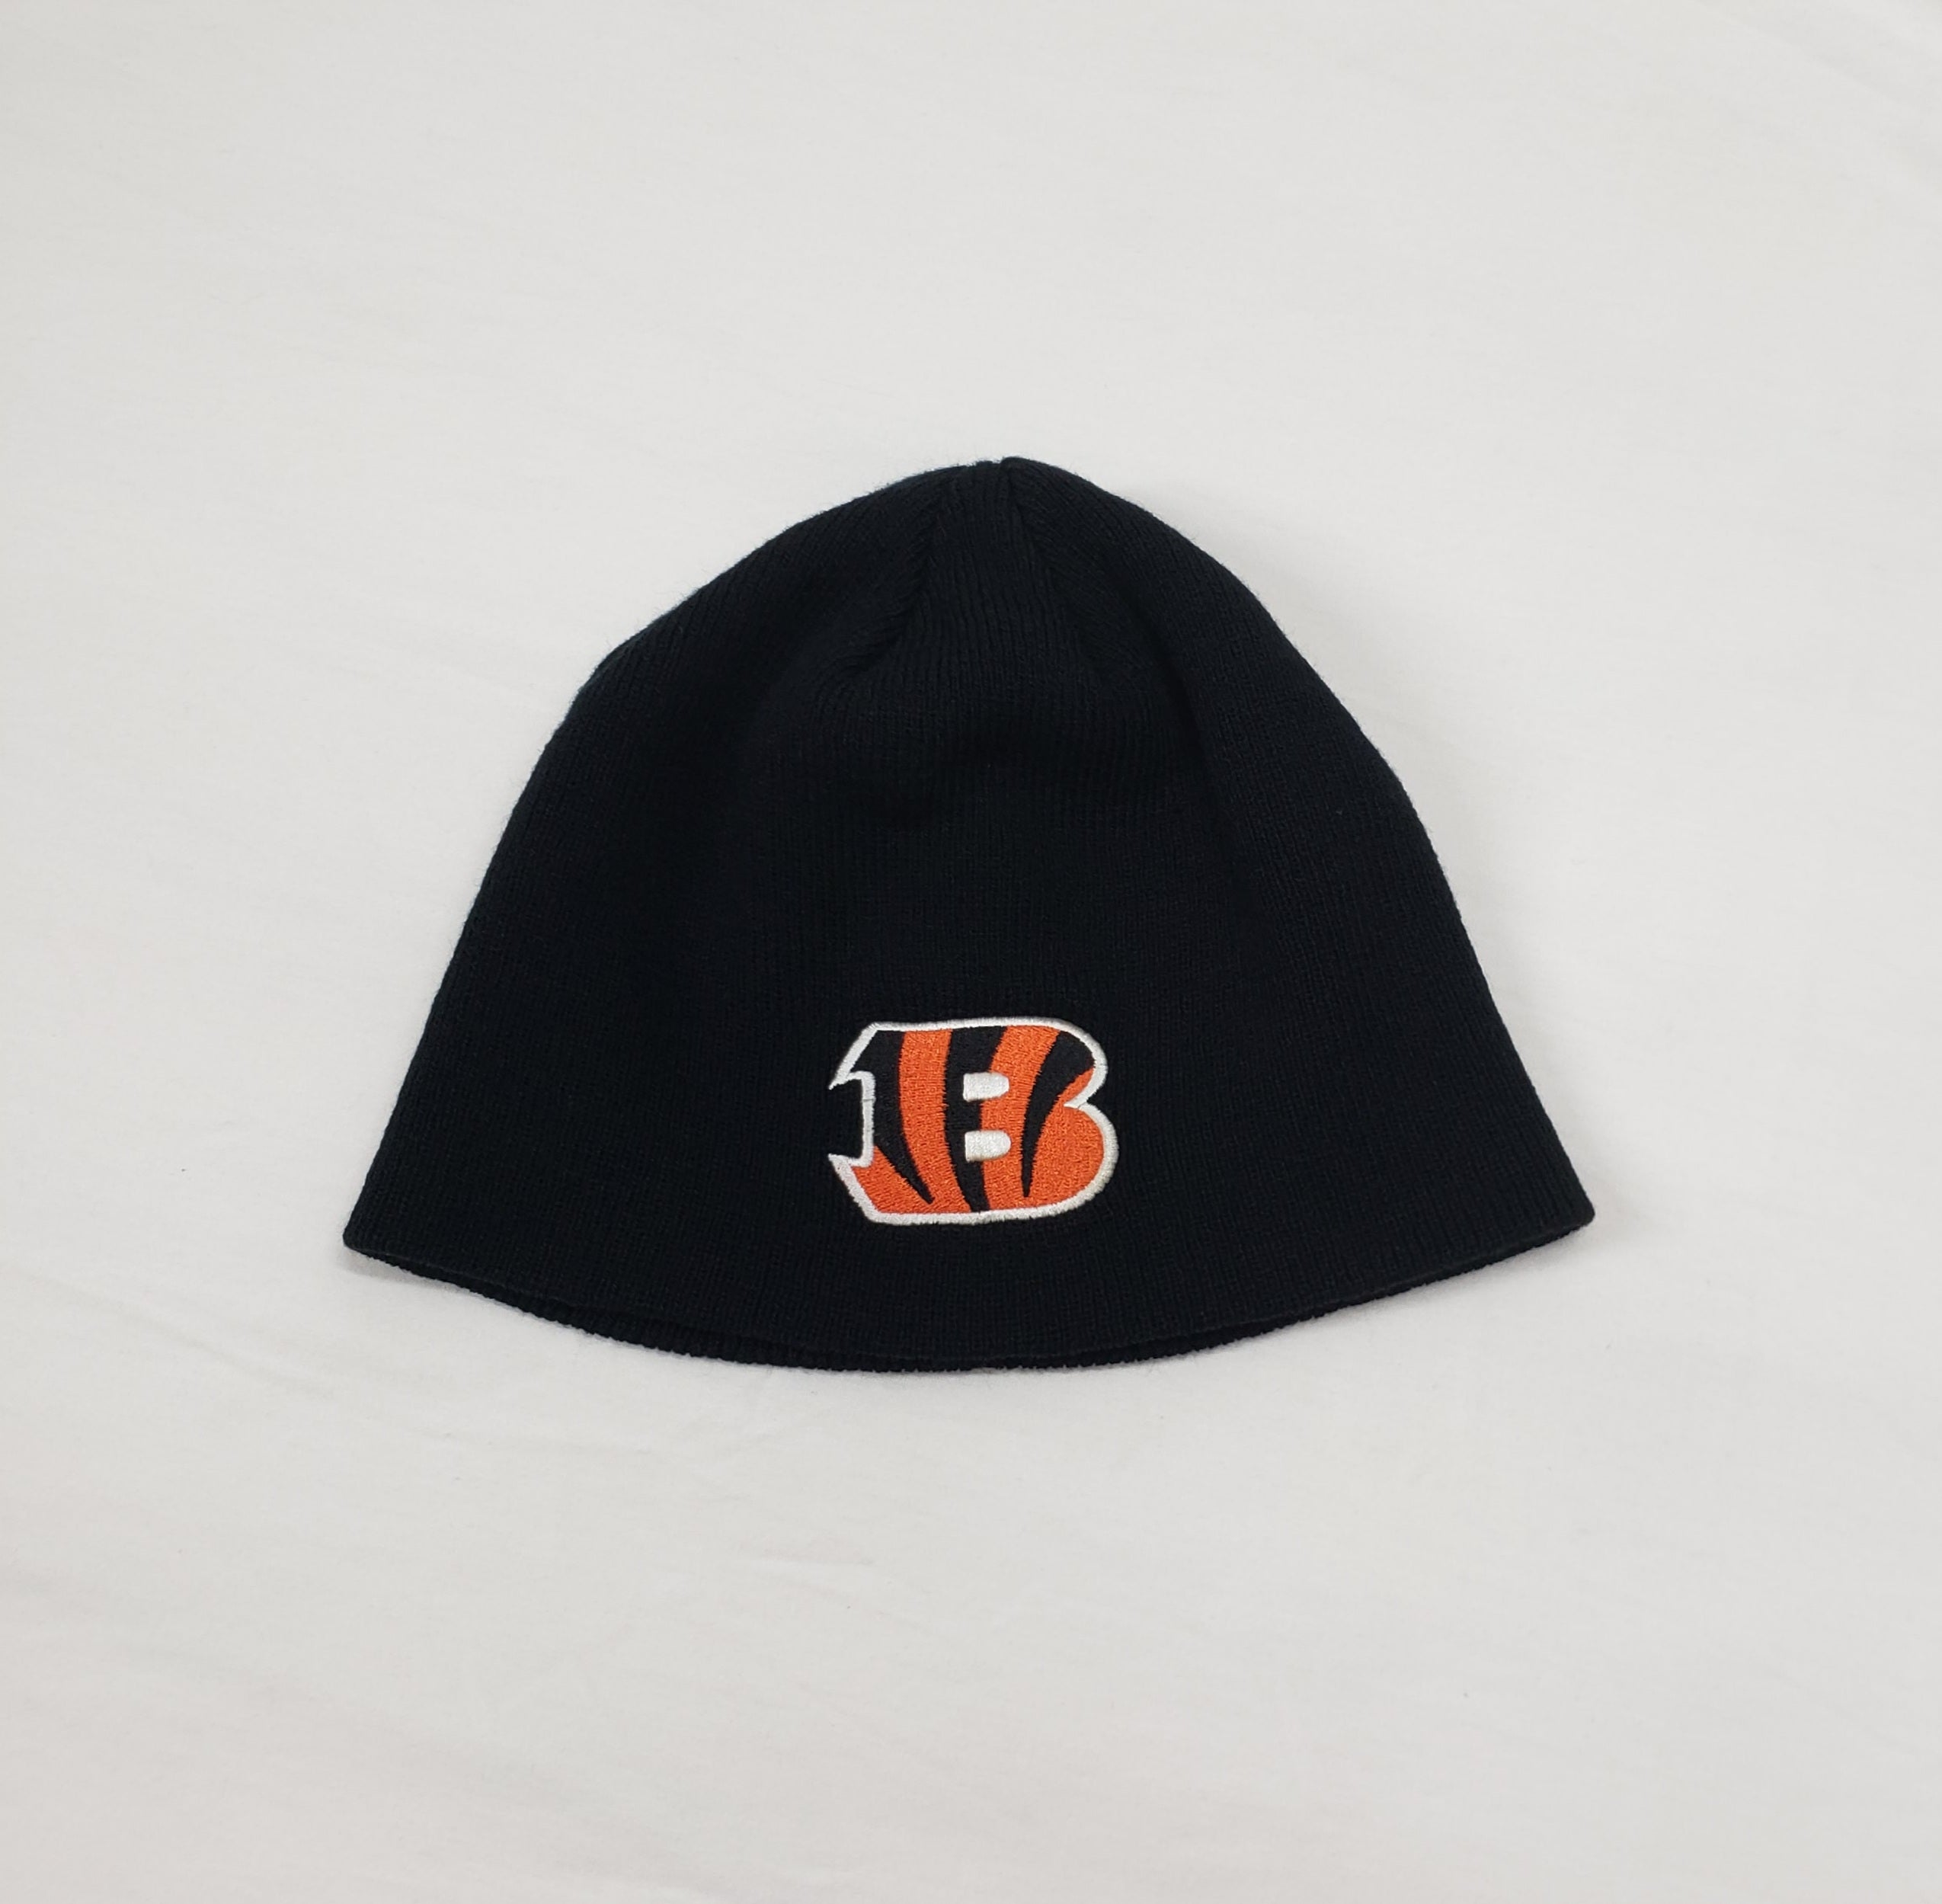 Adult Black Cincinnati Bengals NFL Football Team Beanie Knit Hat Cap  Toboggan OS